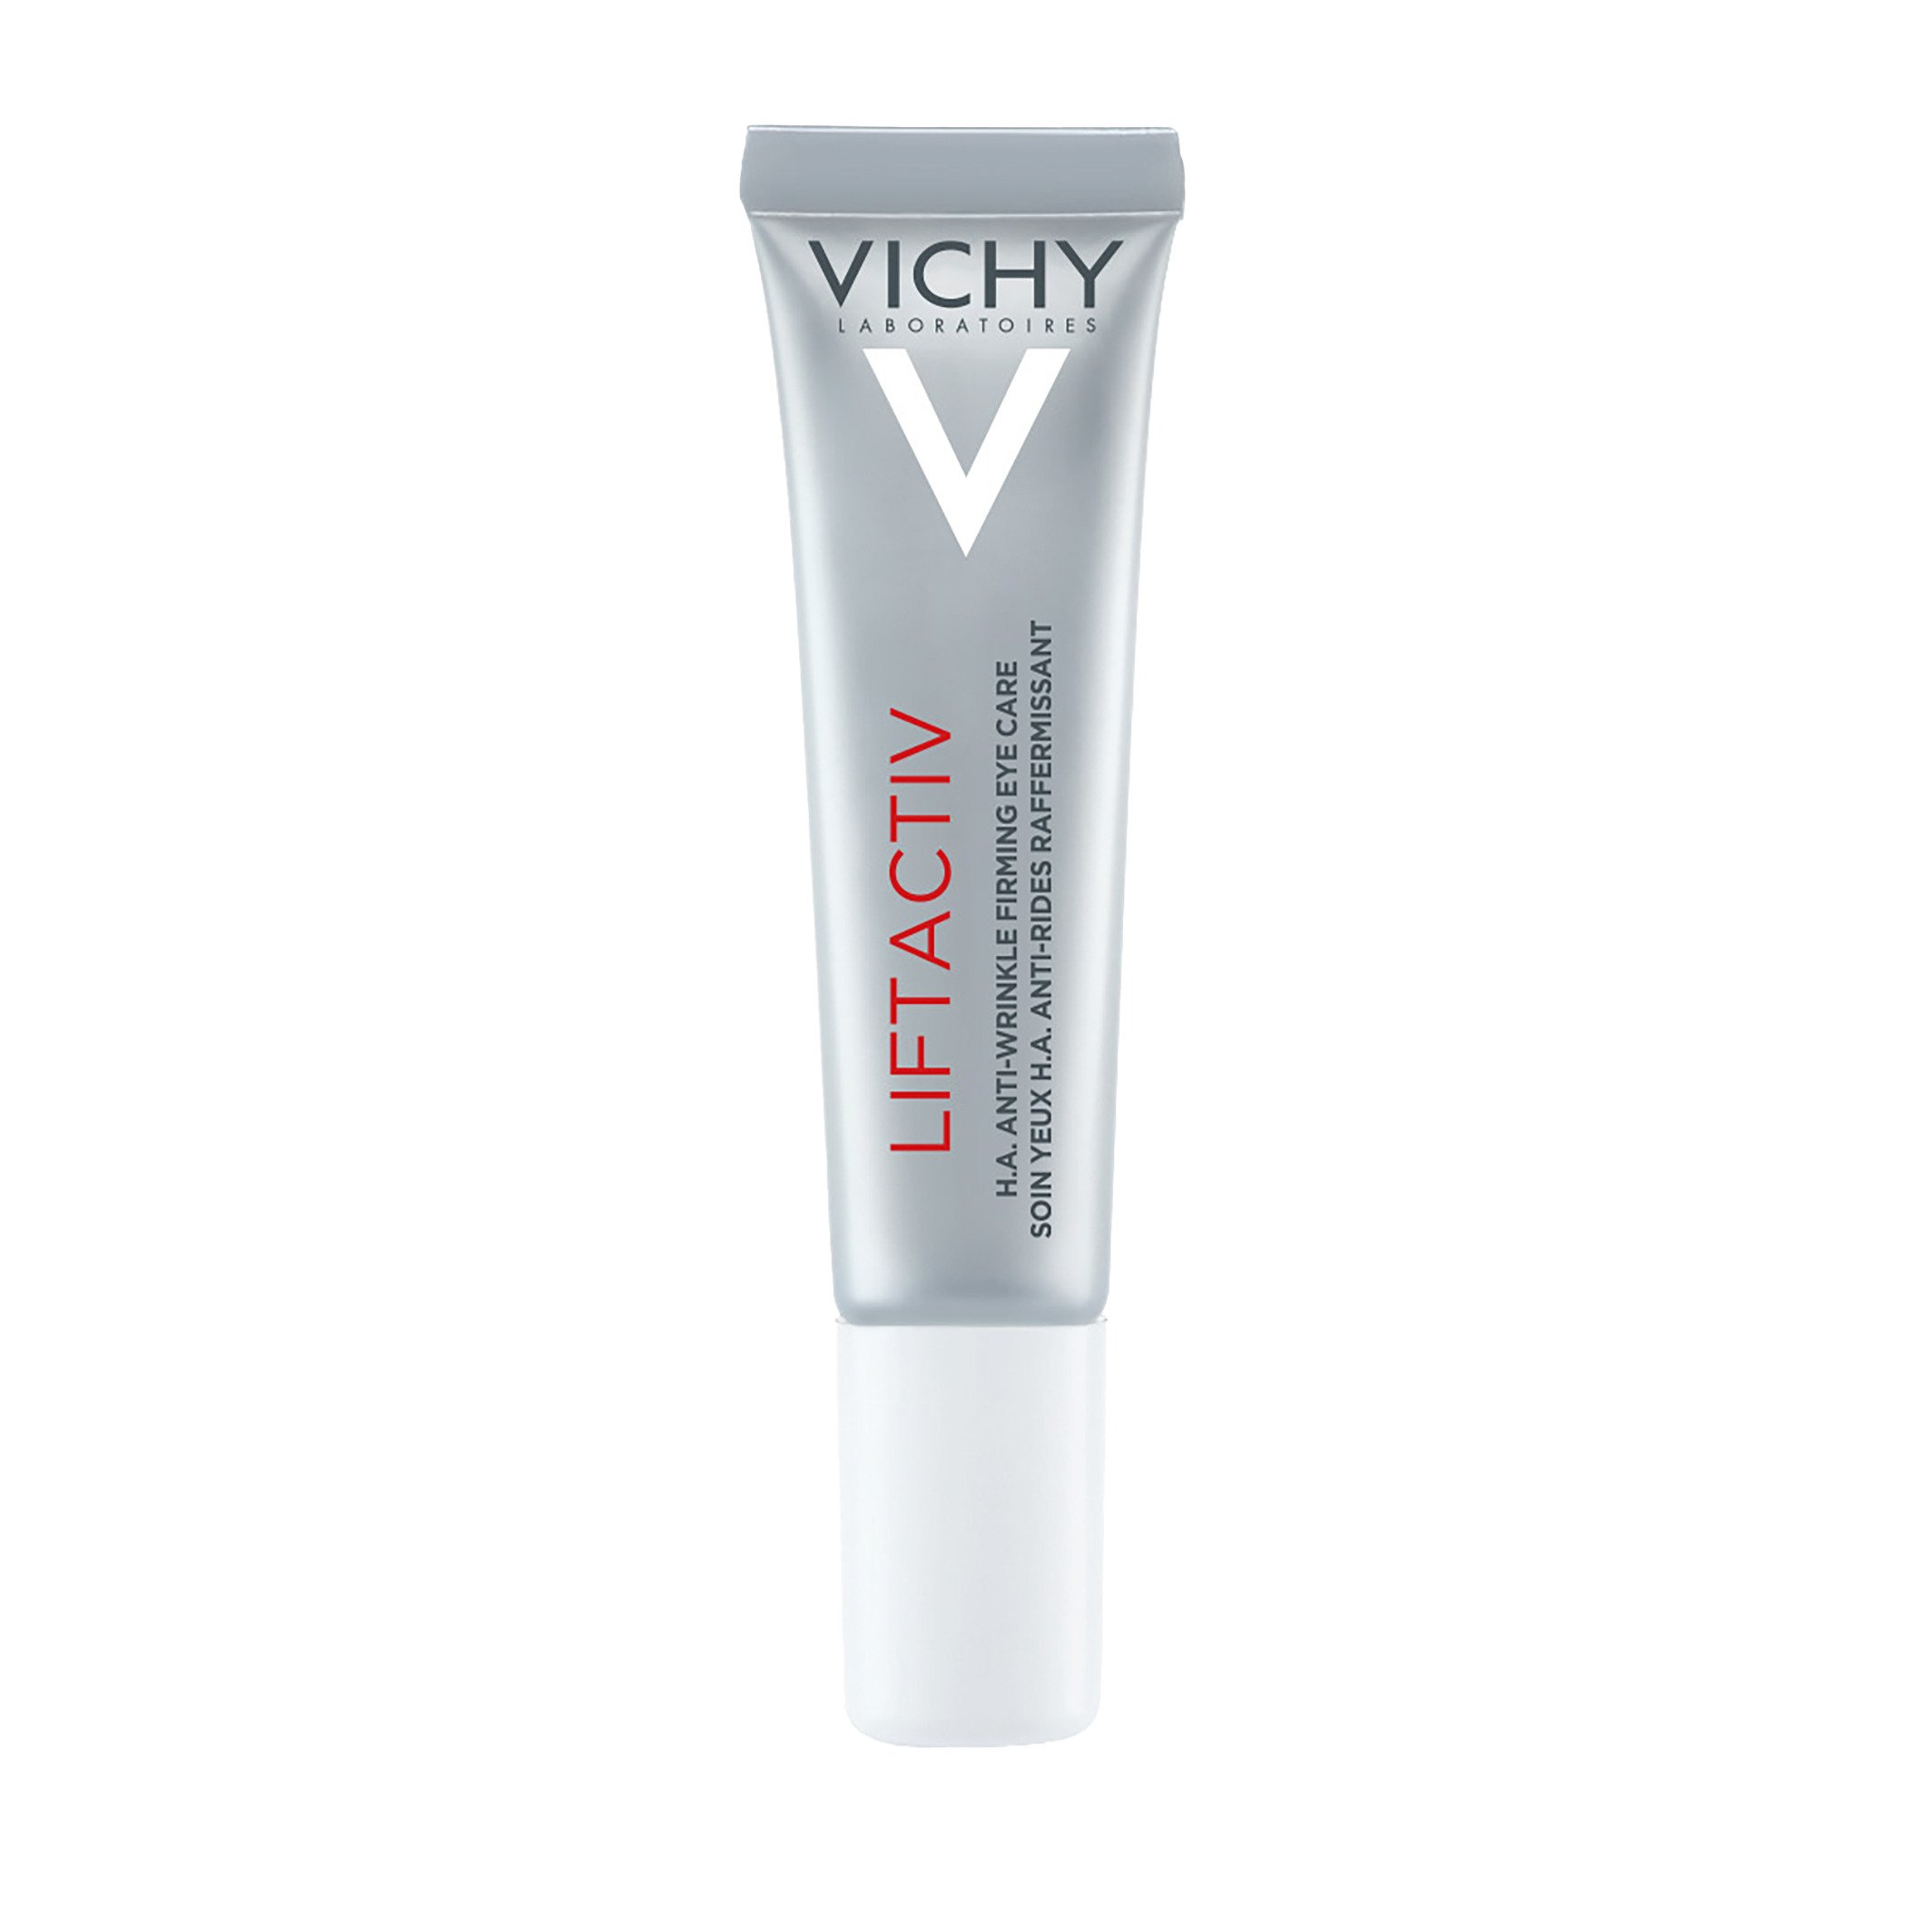 Vichy-LiftActiv-Hyaluronic-Acid-Anti-Wrinkle-Firming-Eye-Cream-3337871323332-1